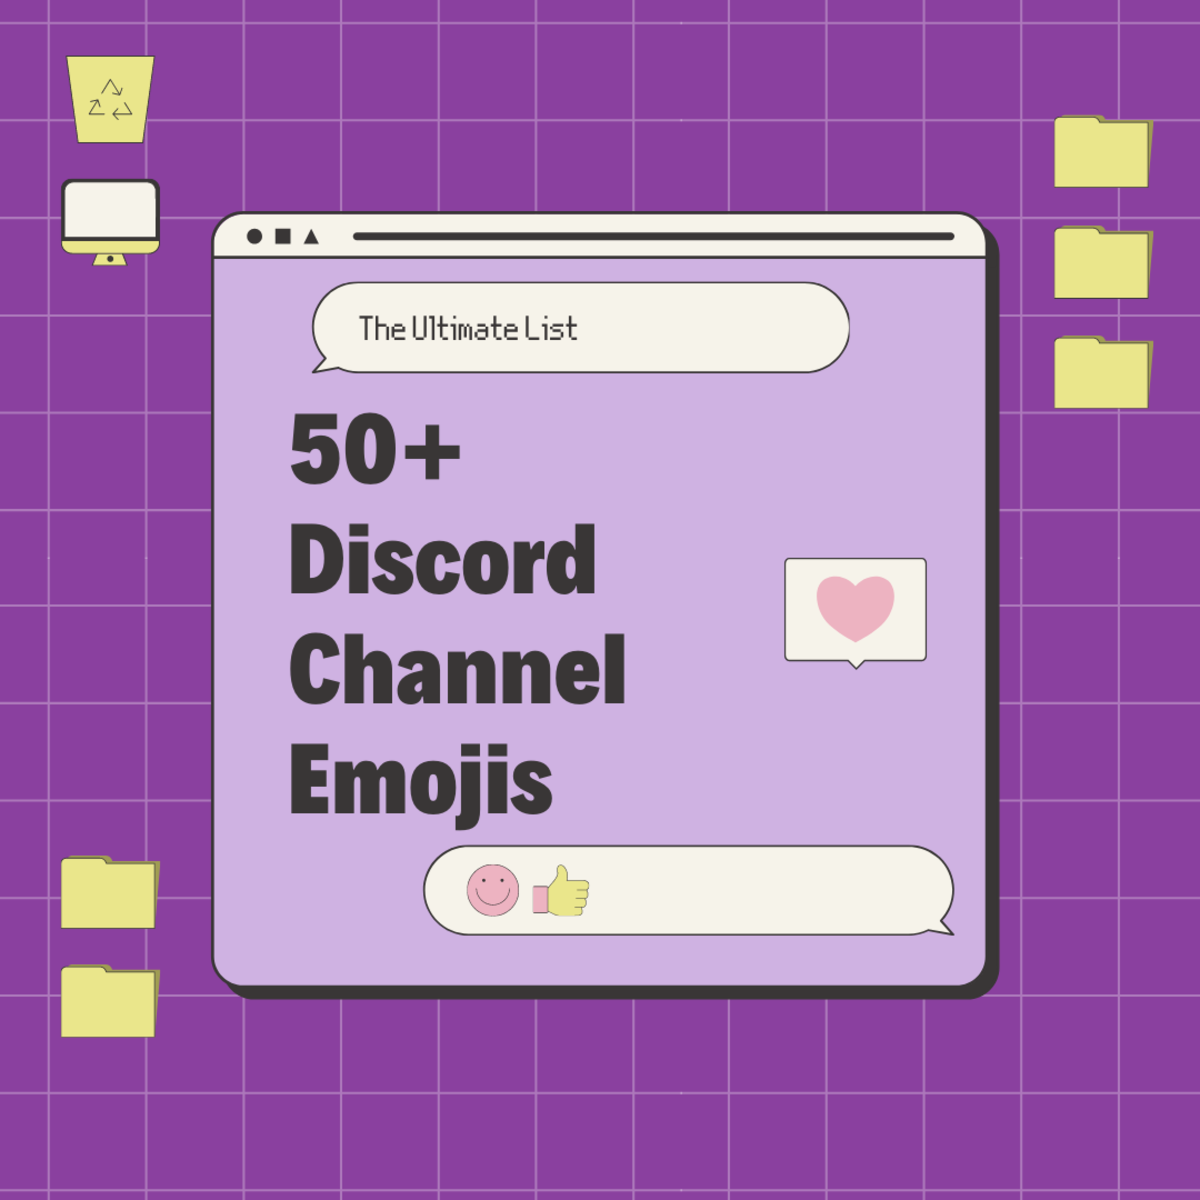 50+ Discord Channel Emoji: The Ultimate List